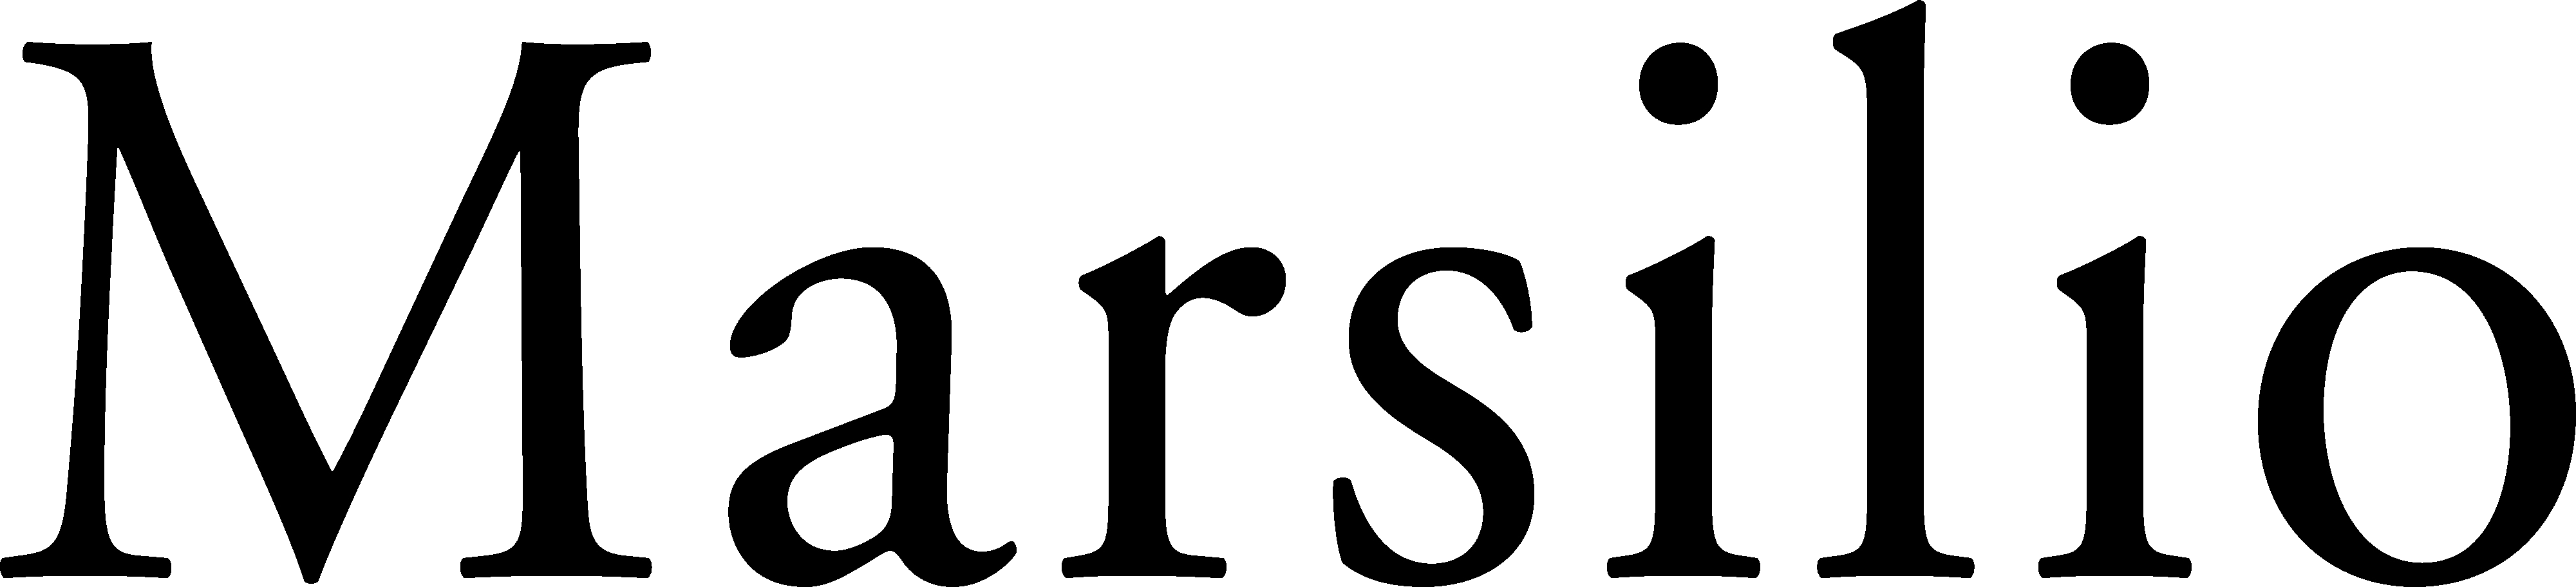 logo-marsilio